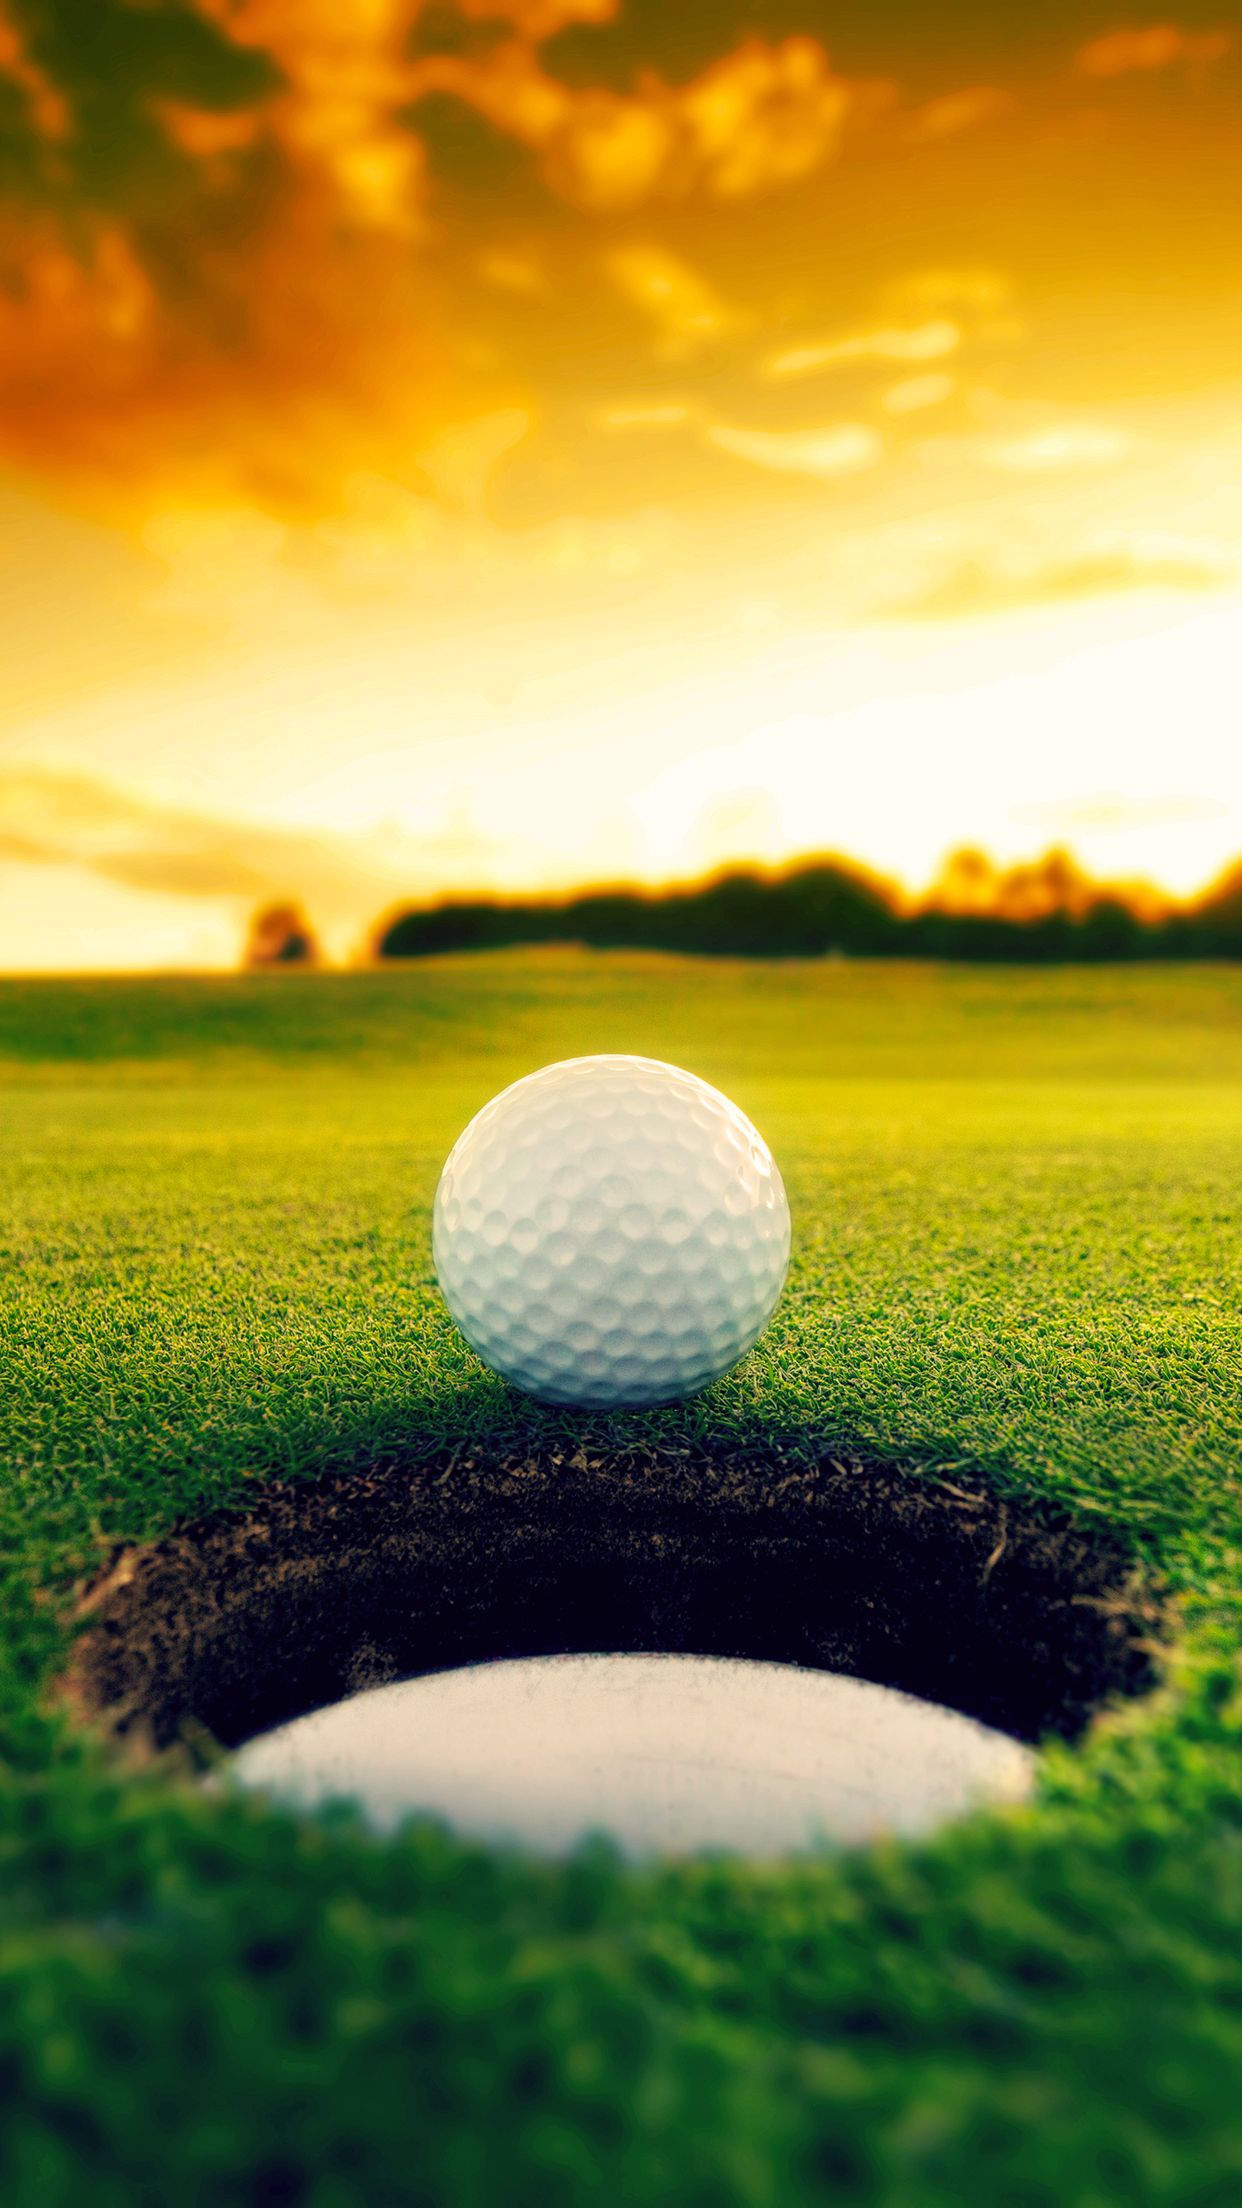 Callawy Golf iPhone Wallpaper. Callawy Golf iPhone Wallpaper, Golf Wallpaper Incredible and Golf Wallpaper